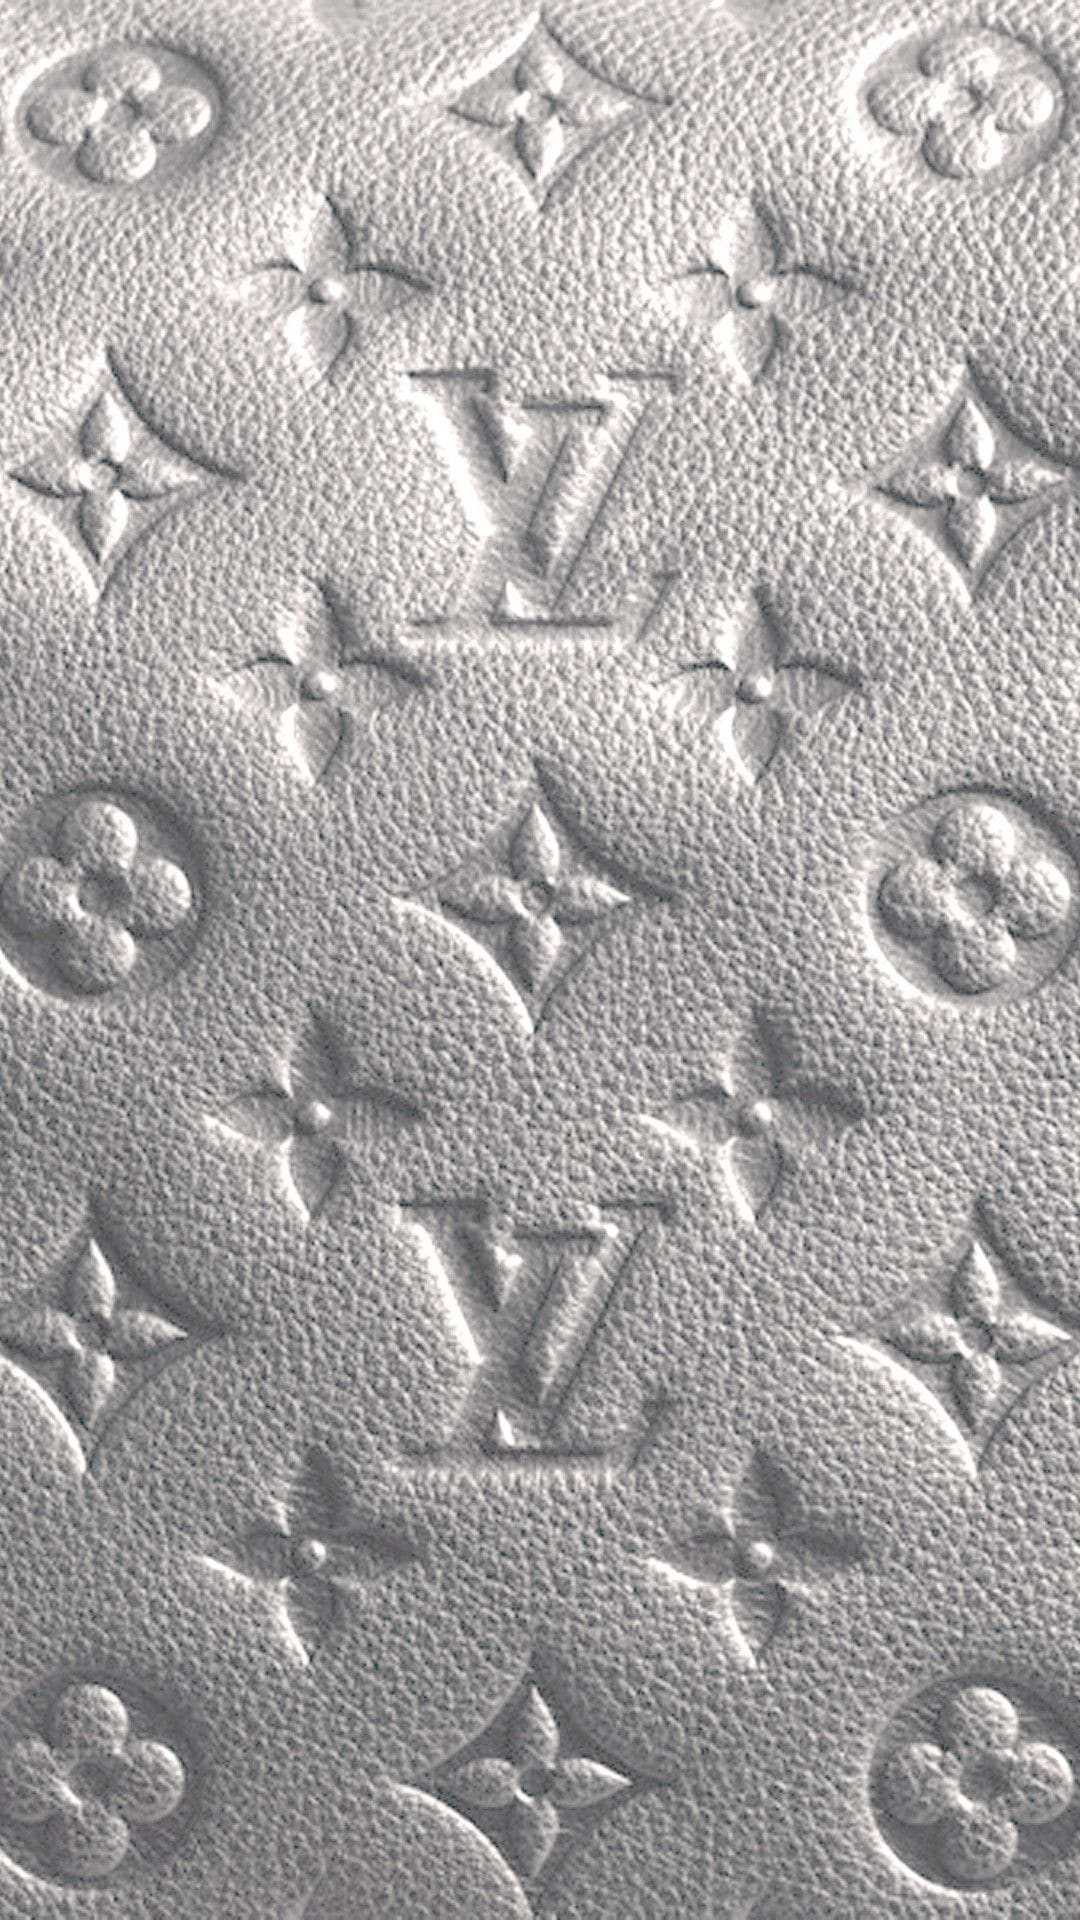 Image result for Louis Viton logo  Louis vuitton iphone wallpaper